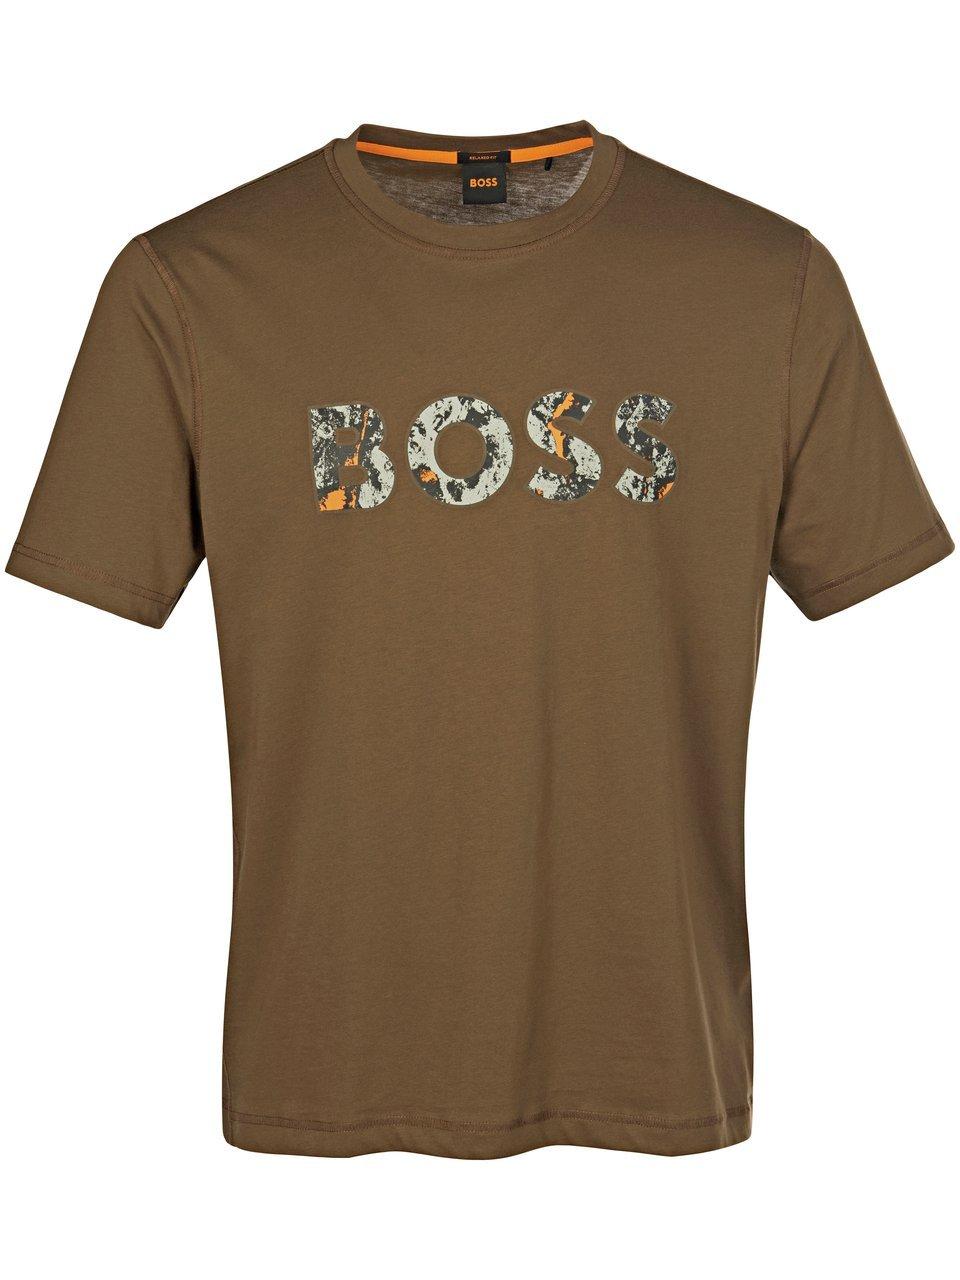 Hugo Boss - T-shirt Teetrury Khaki - Maat M - Regular-fit